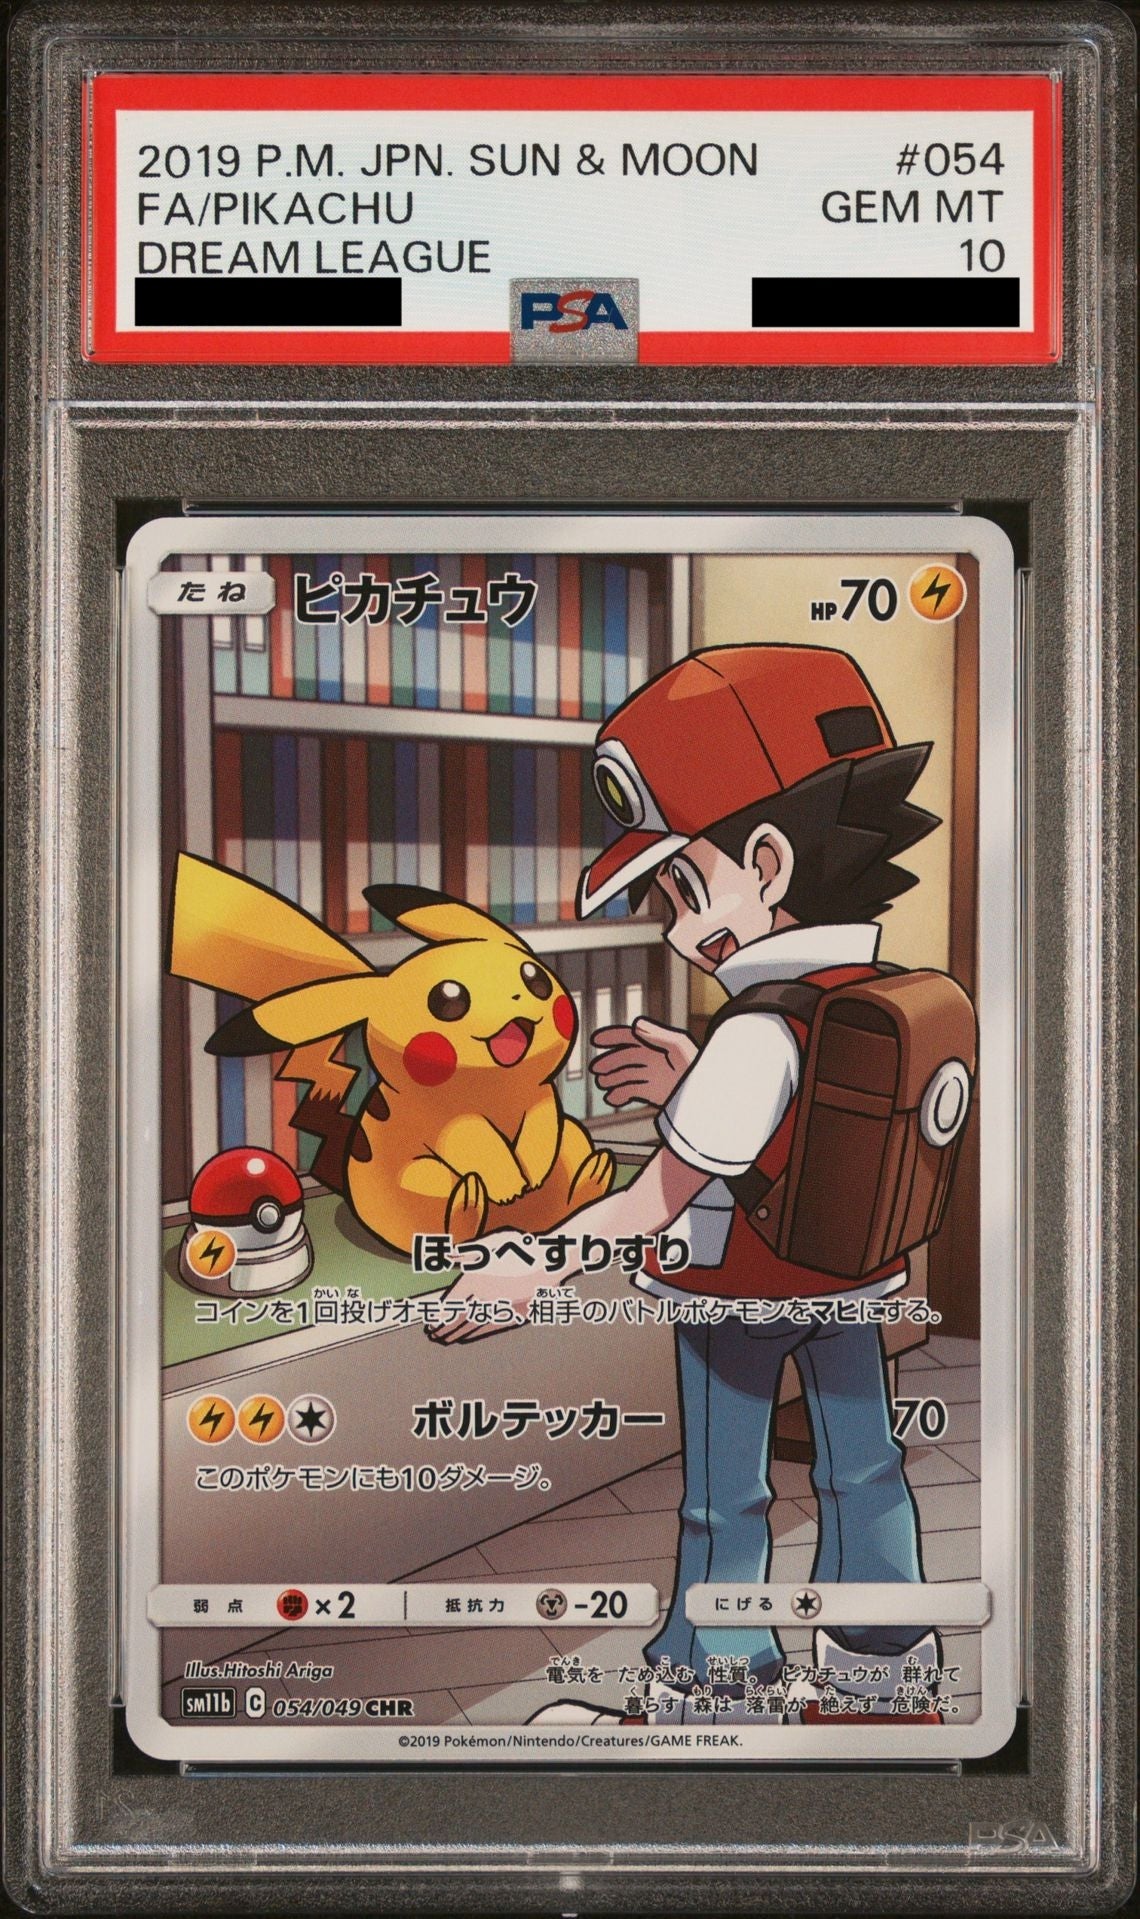 PSA 10 GEM MT Pikachu - Dream League CHR 054/049 *Japanese*